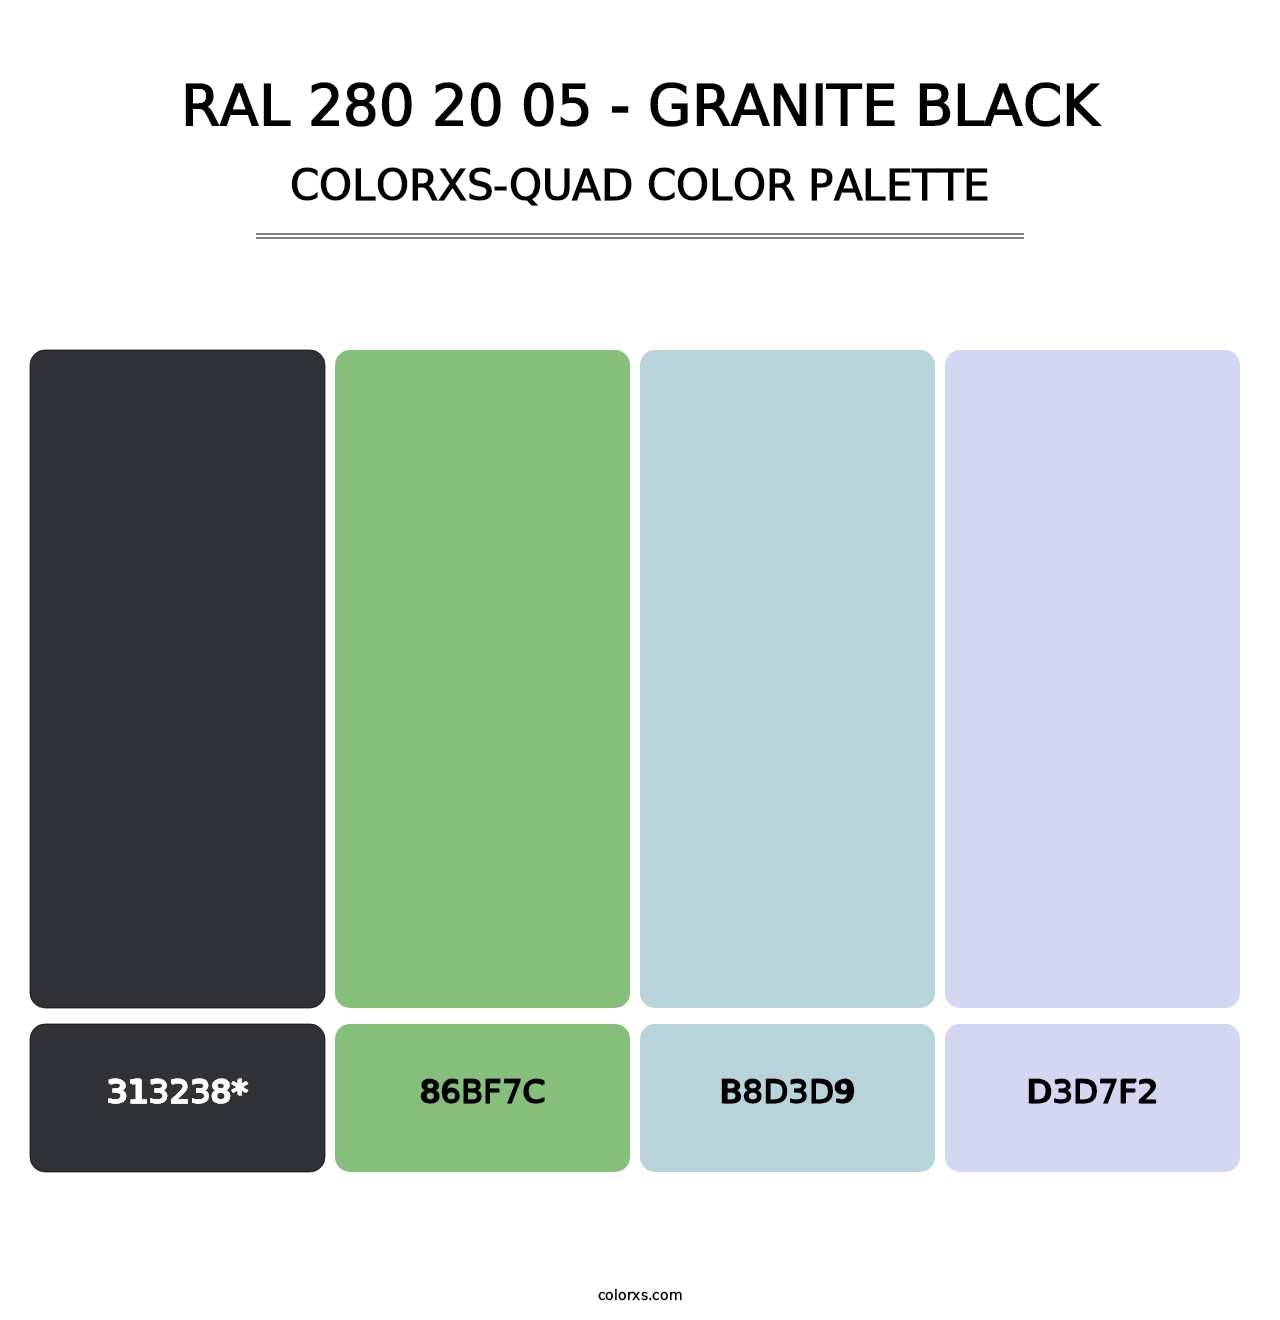 RAL 280 20 05 - Granite Black - Colorxs Quad Palette